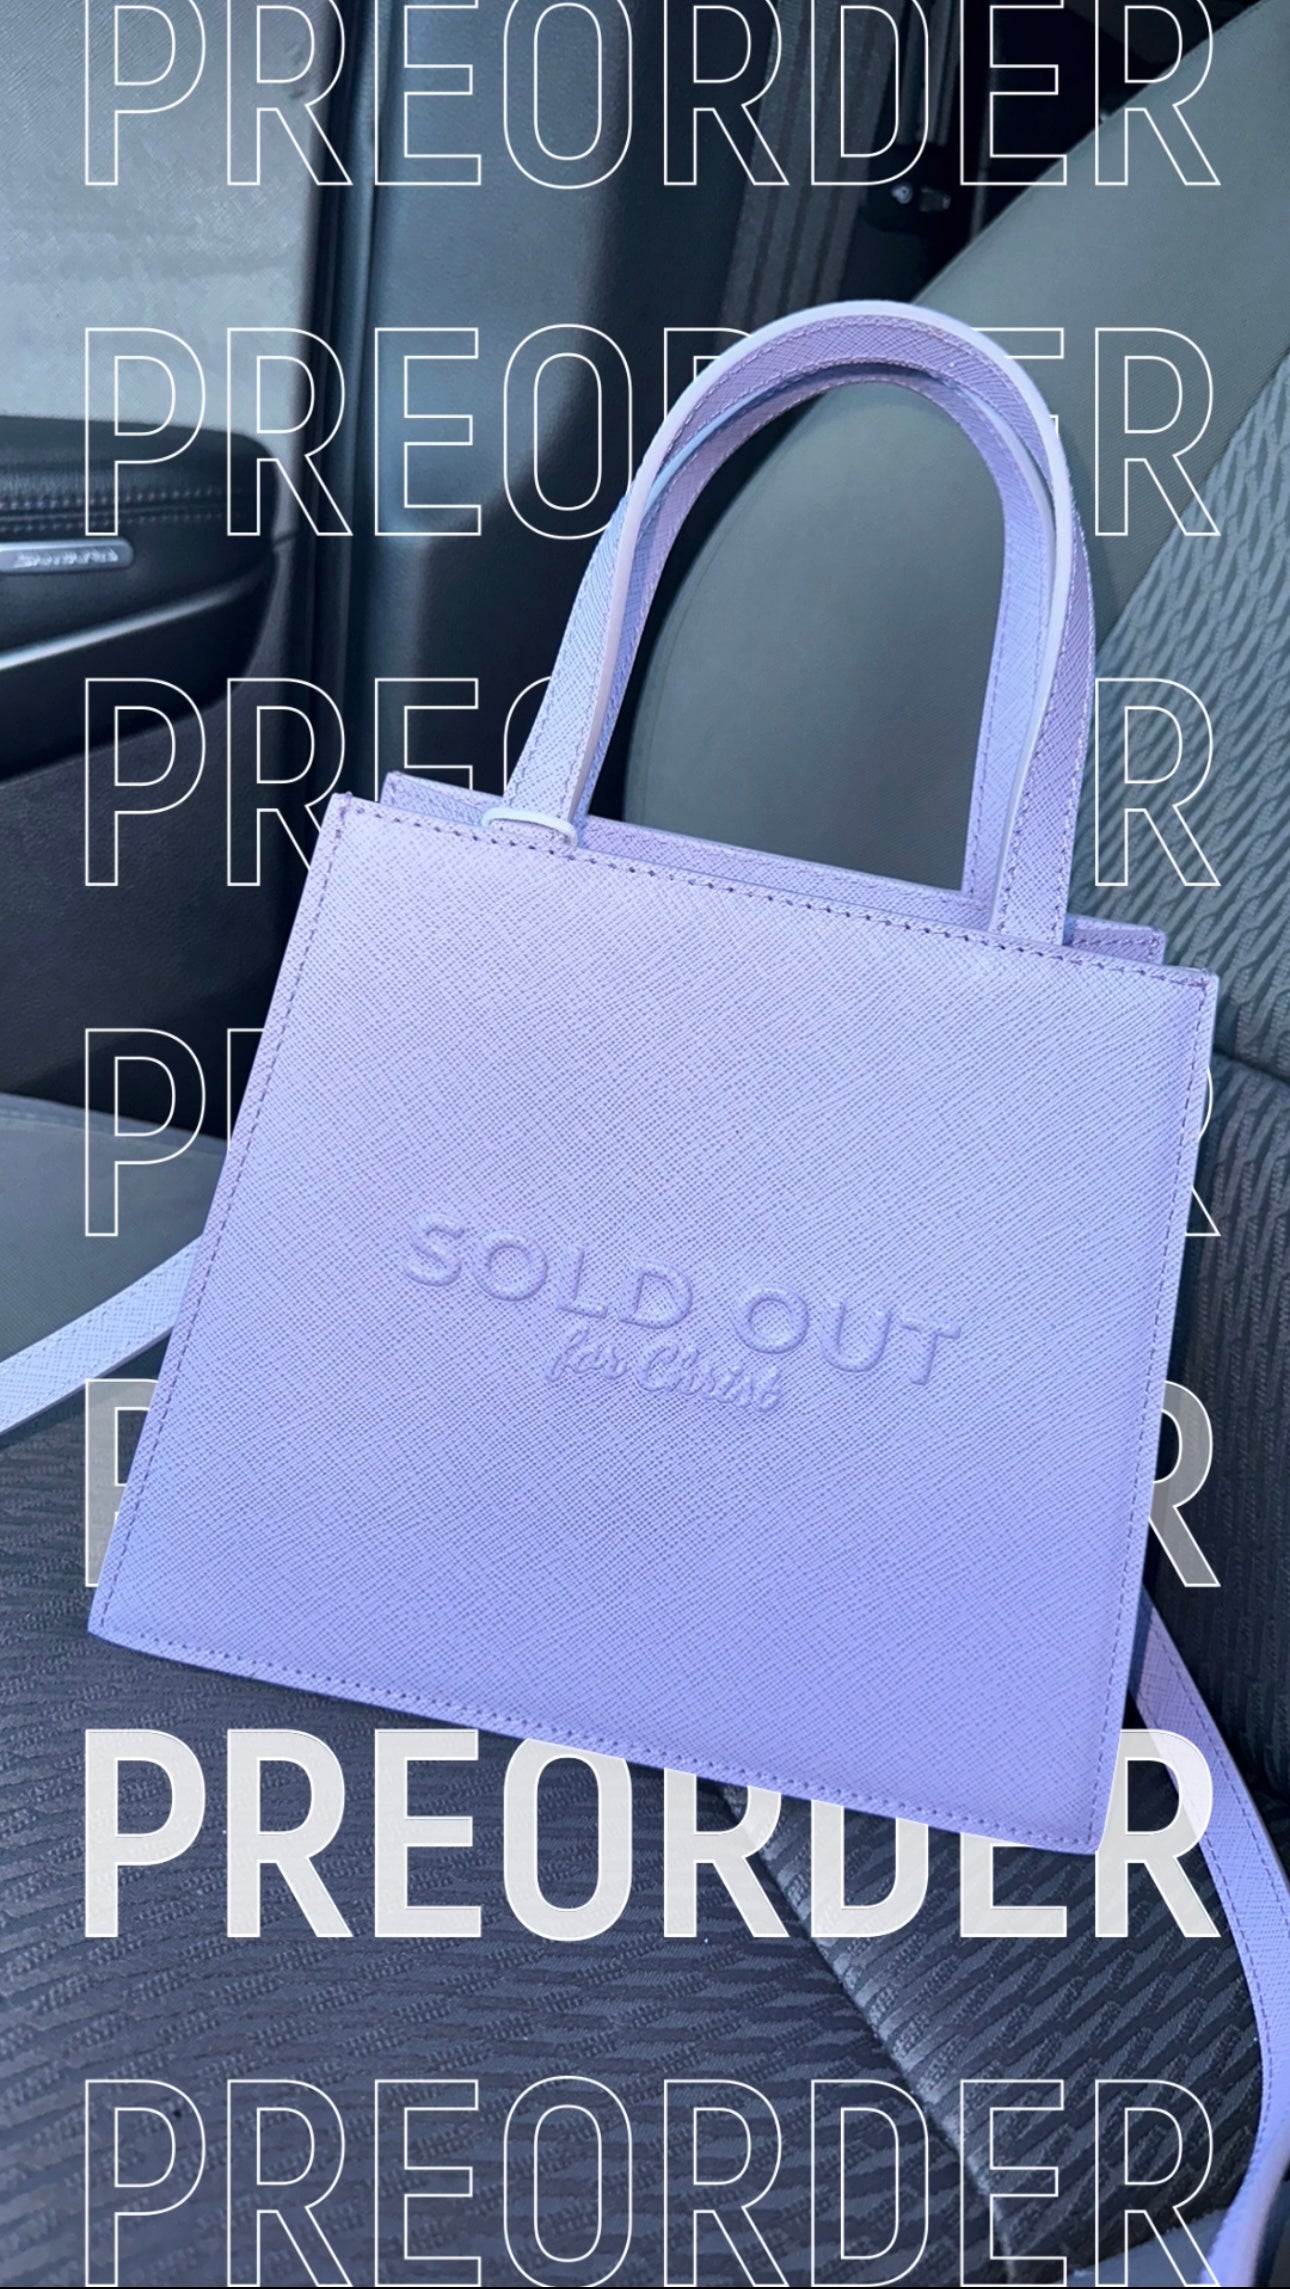 Sold Out for Christ Handbag (PreOrder)